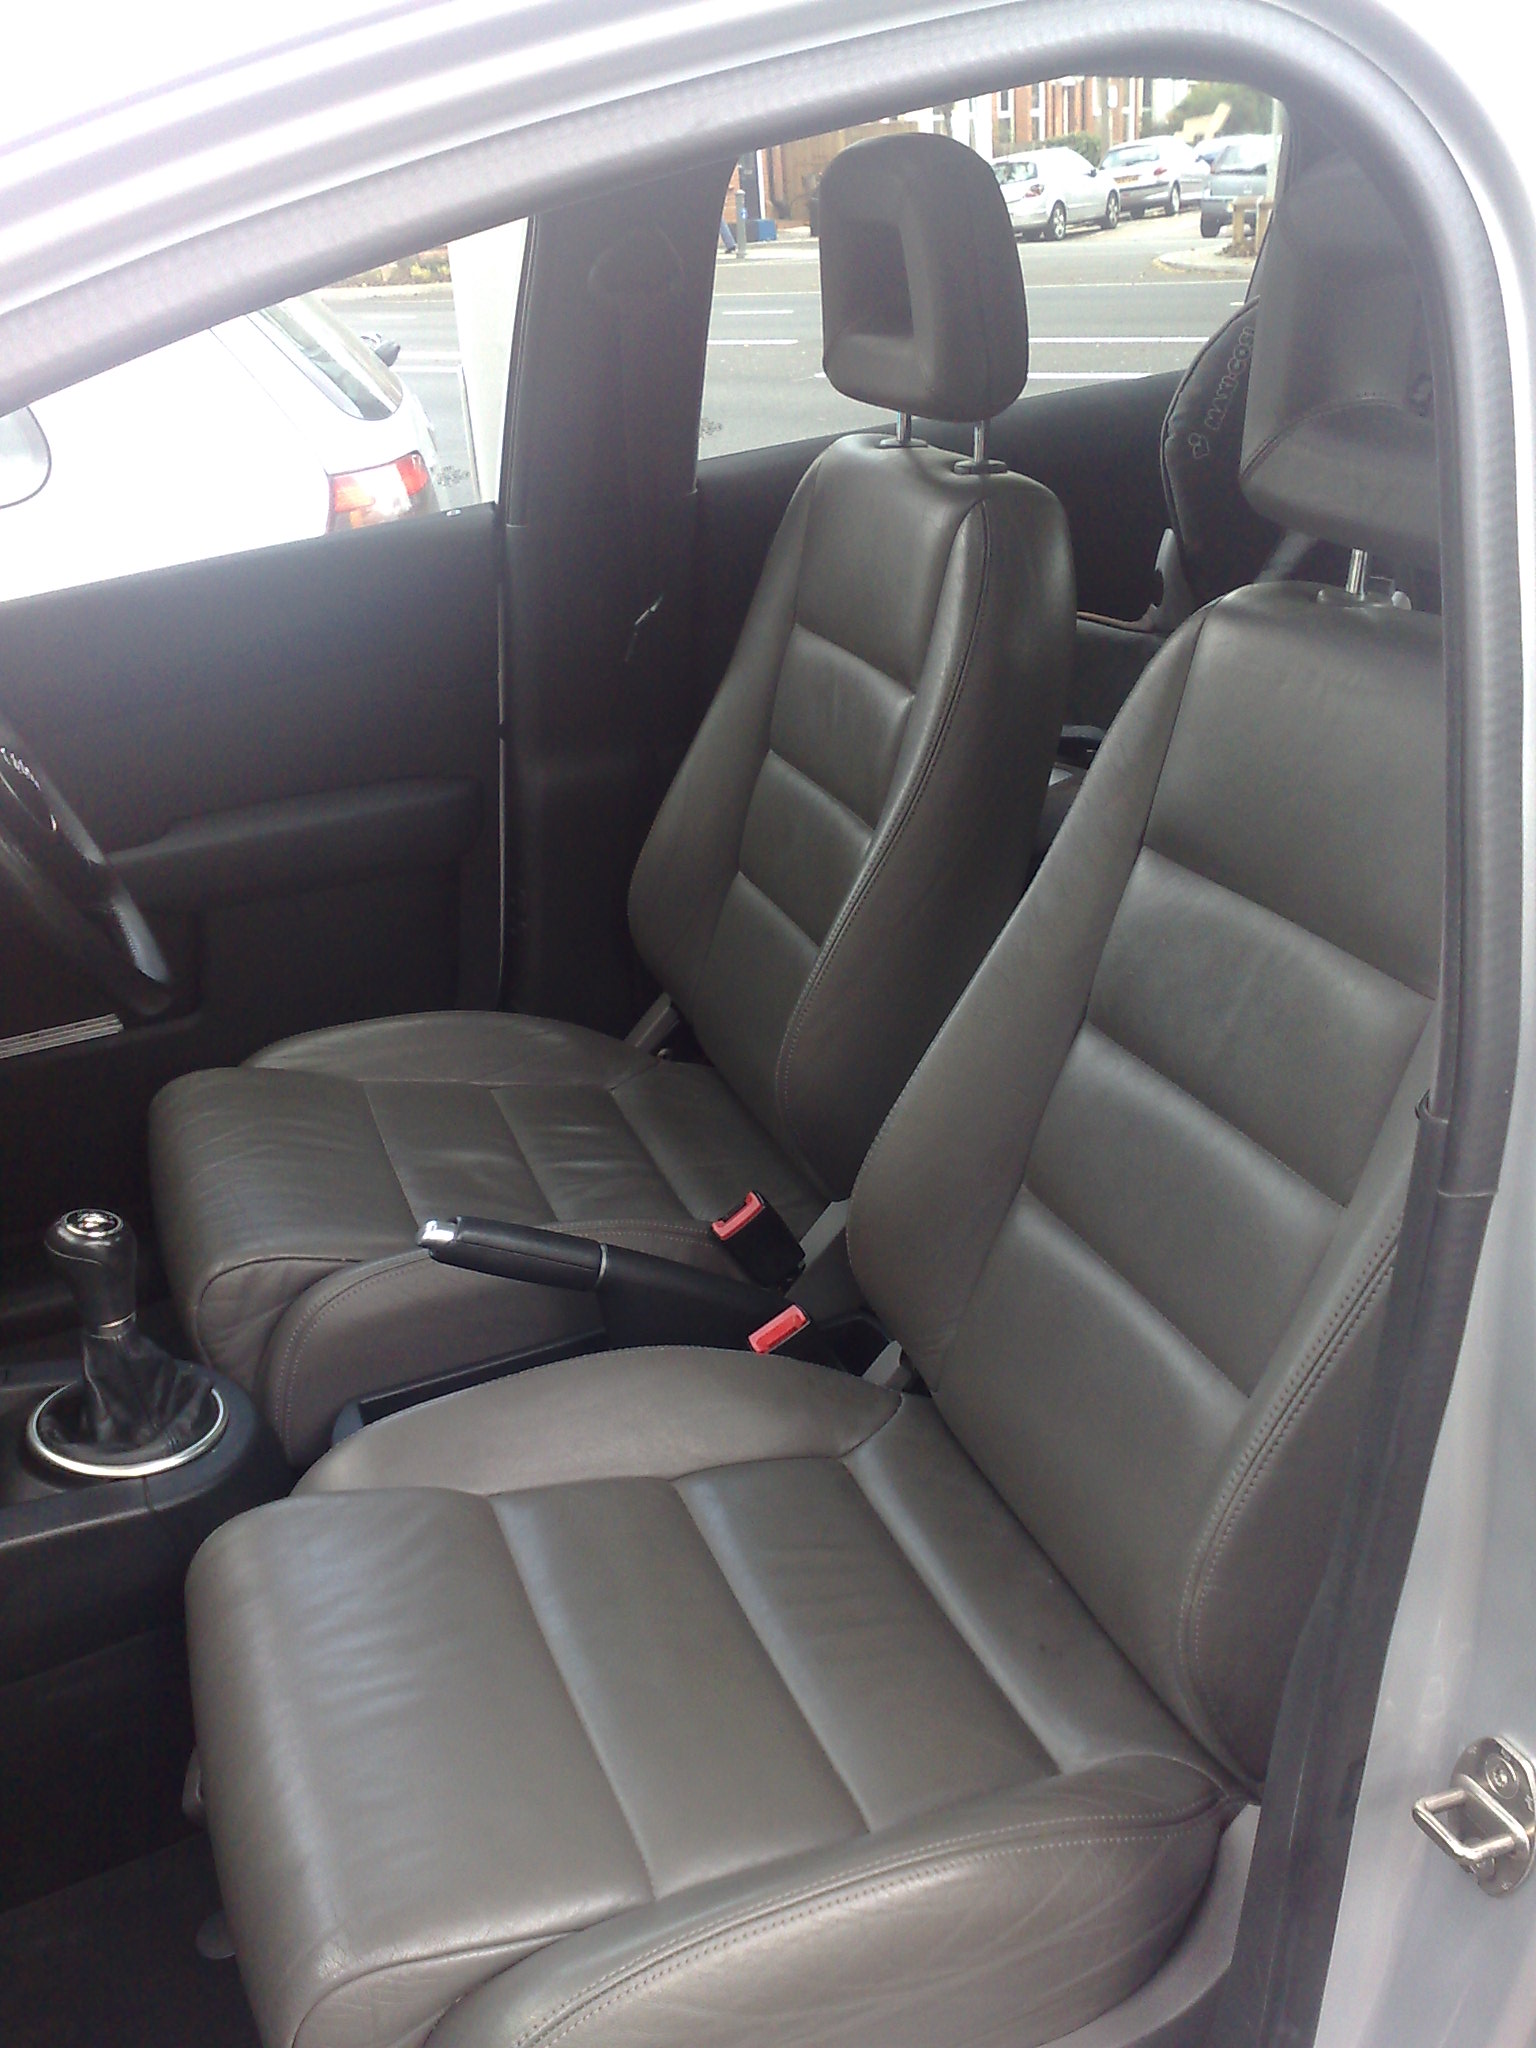 Heated SE leather seats